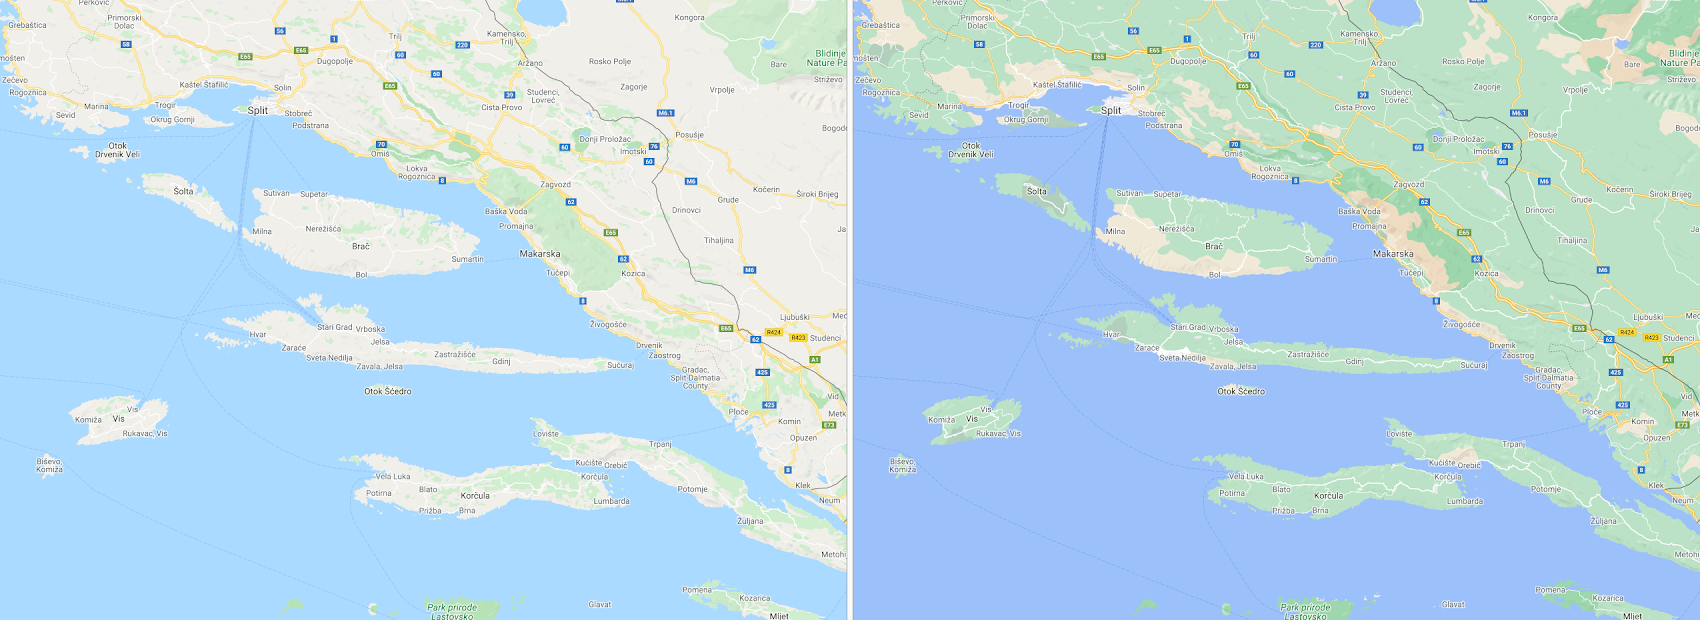 Croatia New Map Styling